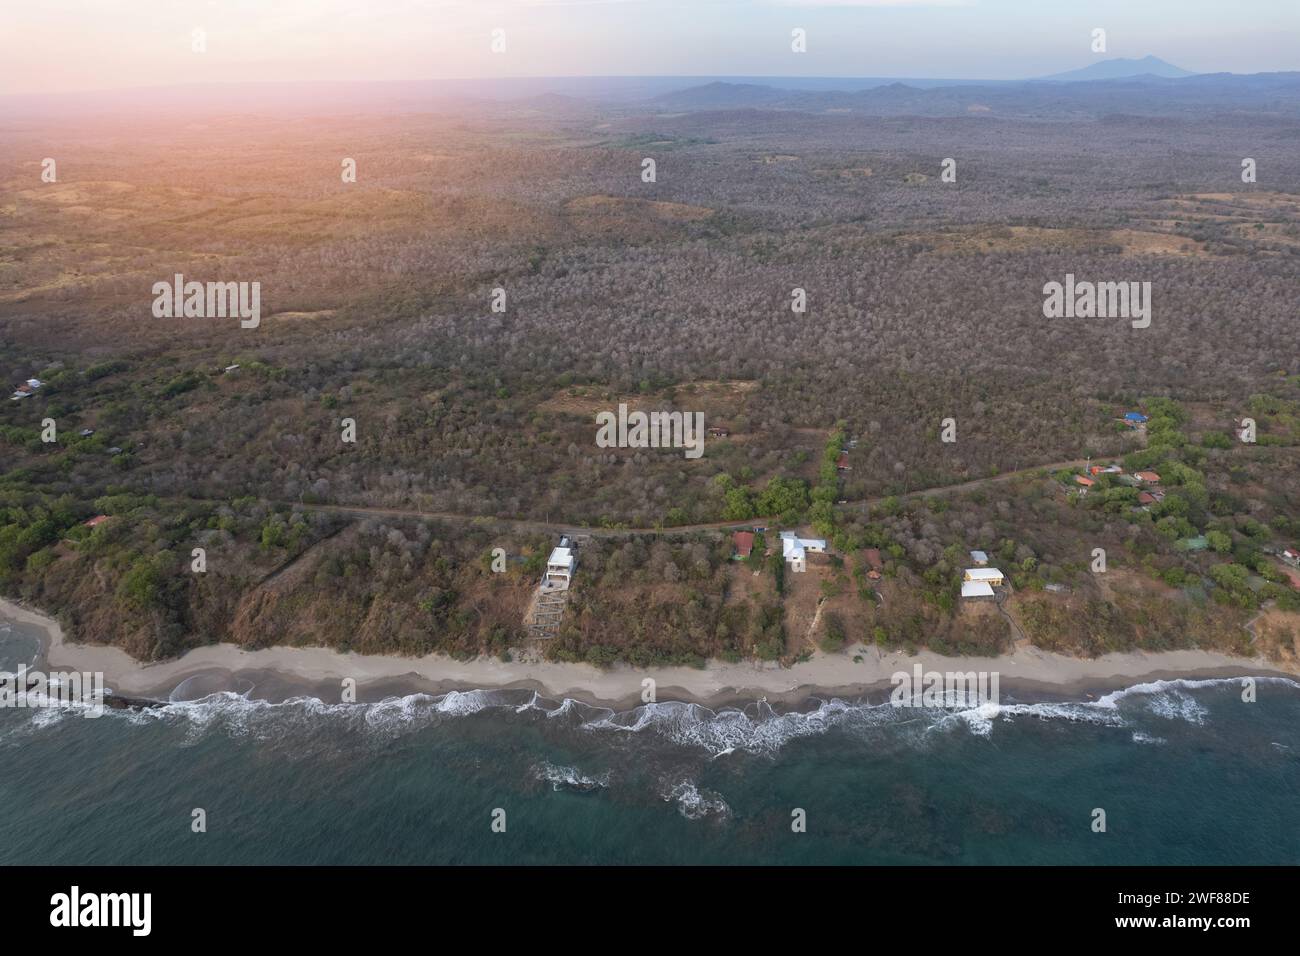 Seashore landscape in central america aerial above drone view Stock Photo